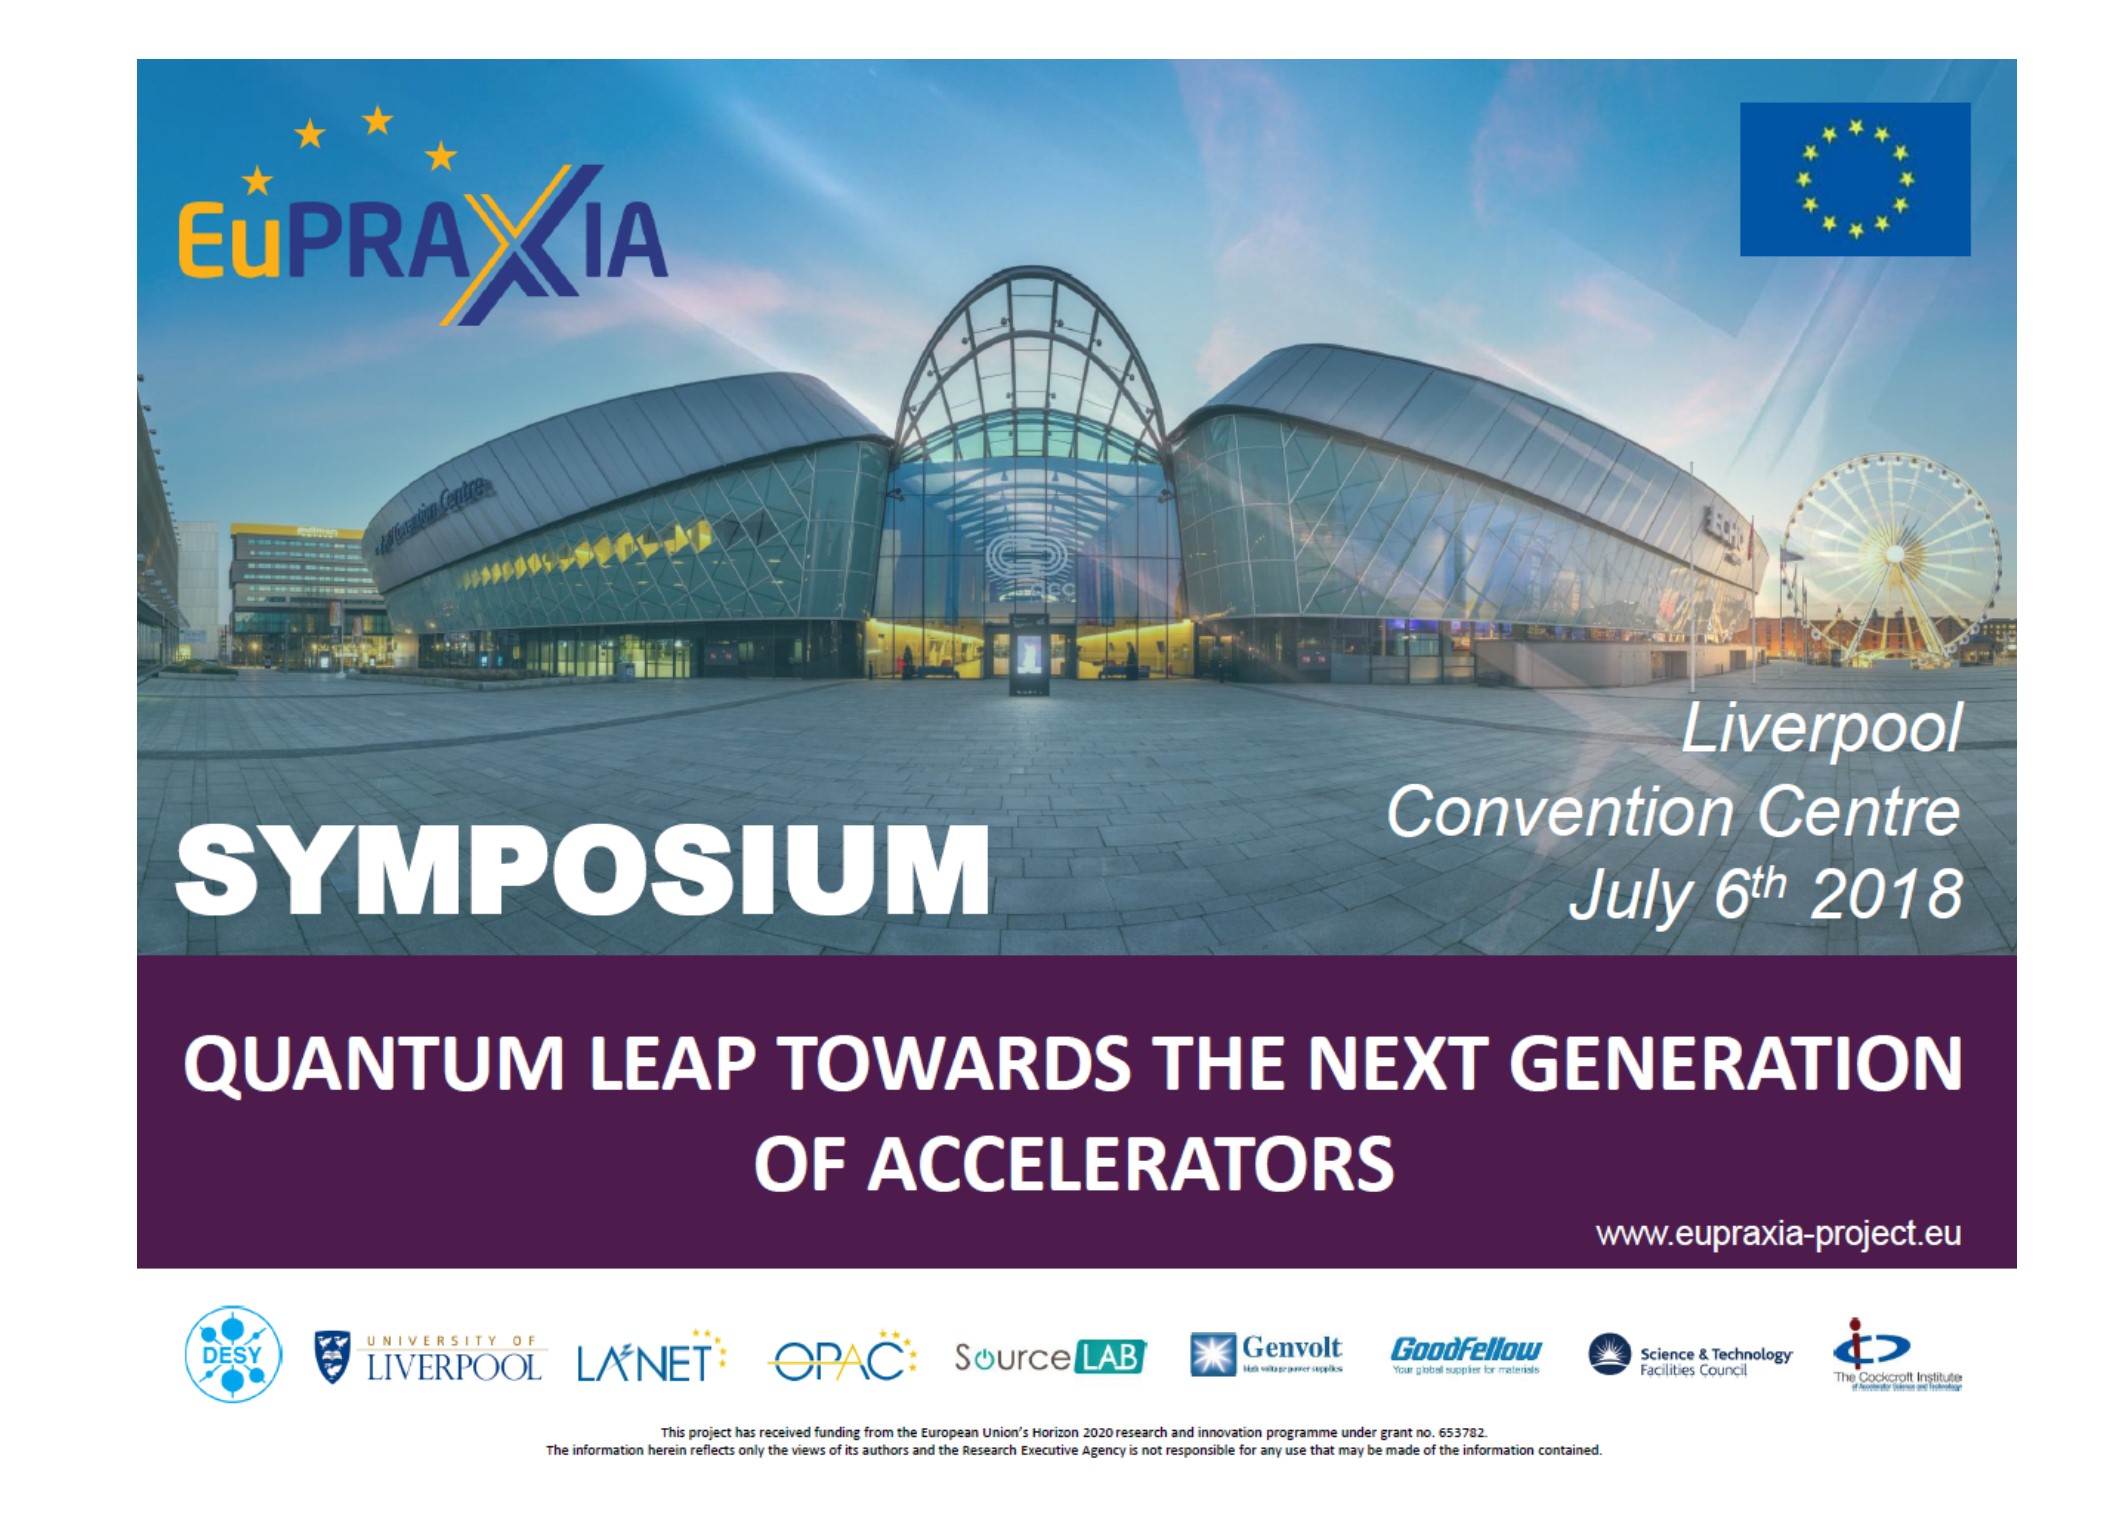 Symposium: Quantum Leap Towards the Next Generation of Particle Accelerators-Liverpool, UK